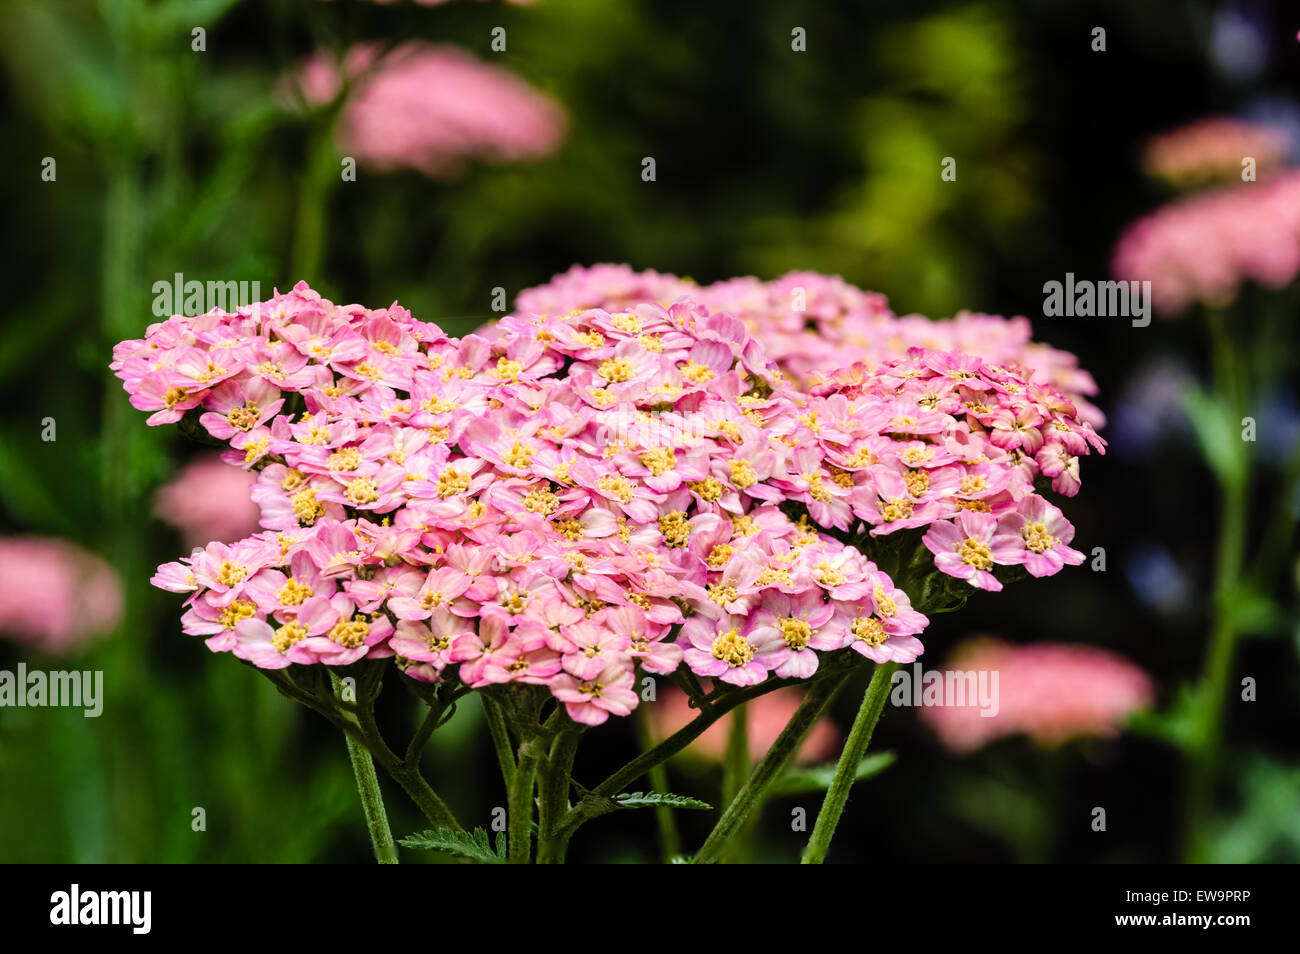 Pink Yarrow in full bloom in the garden Stock Photo